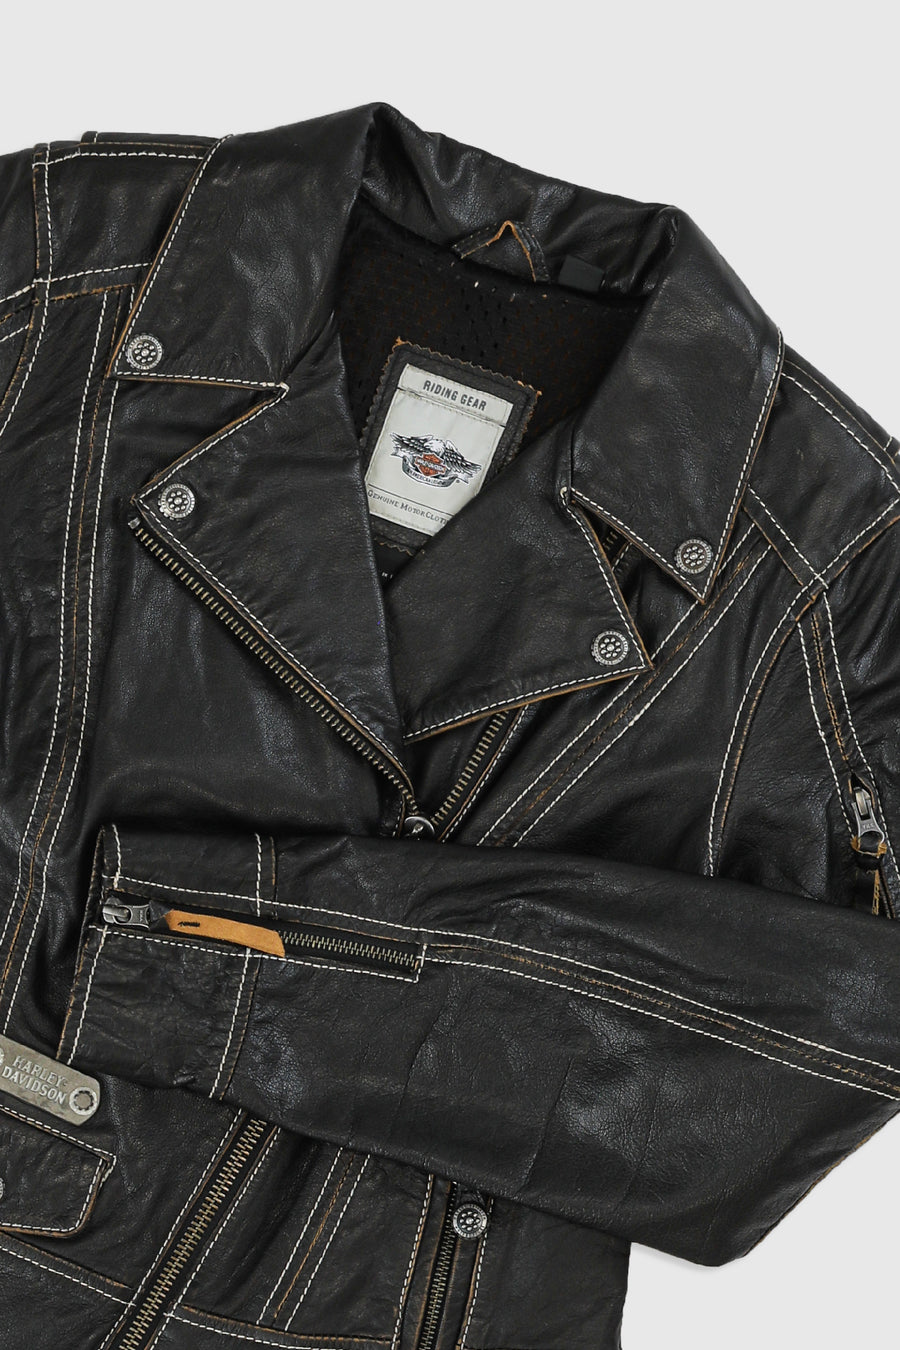 Vintage Harley Leather Jacket